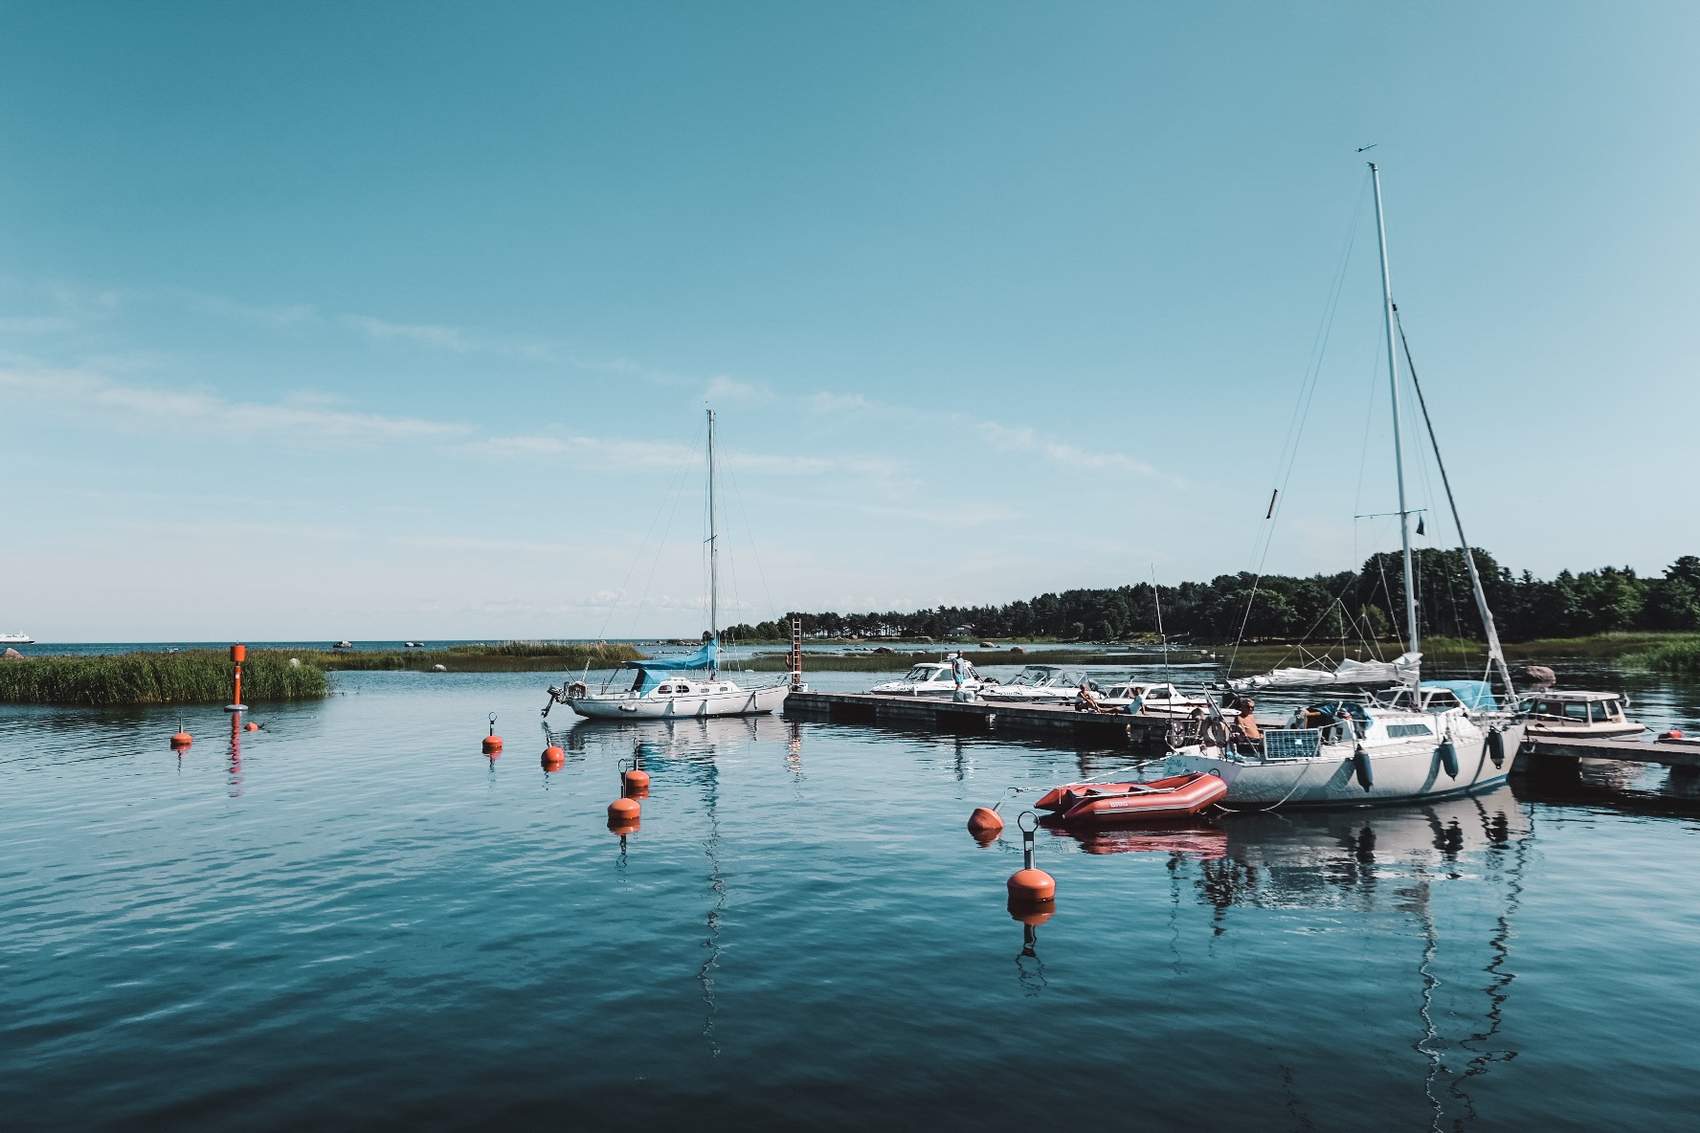 Boats at Prangli harbour near Tallinn, Estonia Photo: Kadi-Liis Koppel